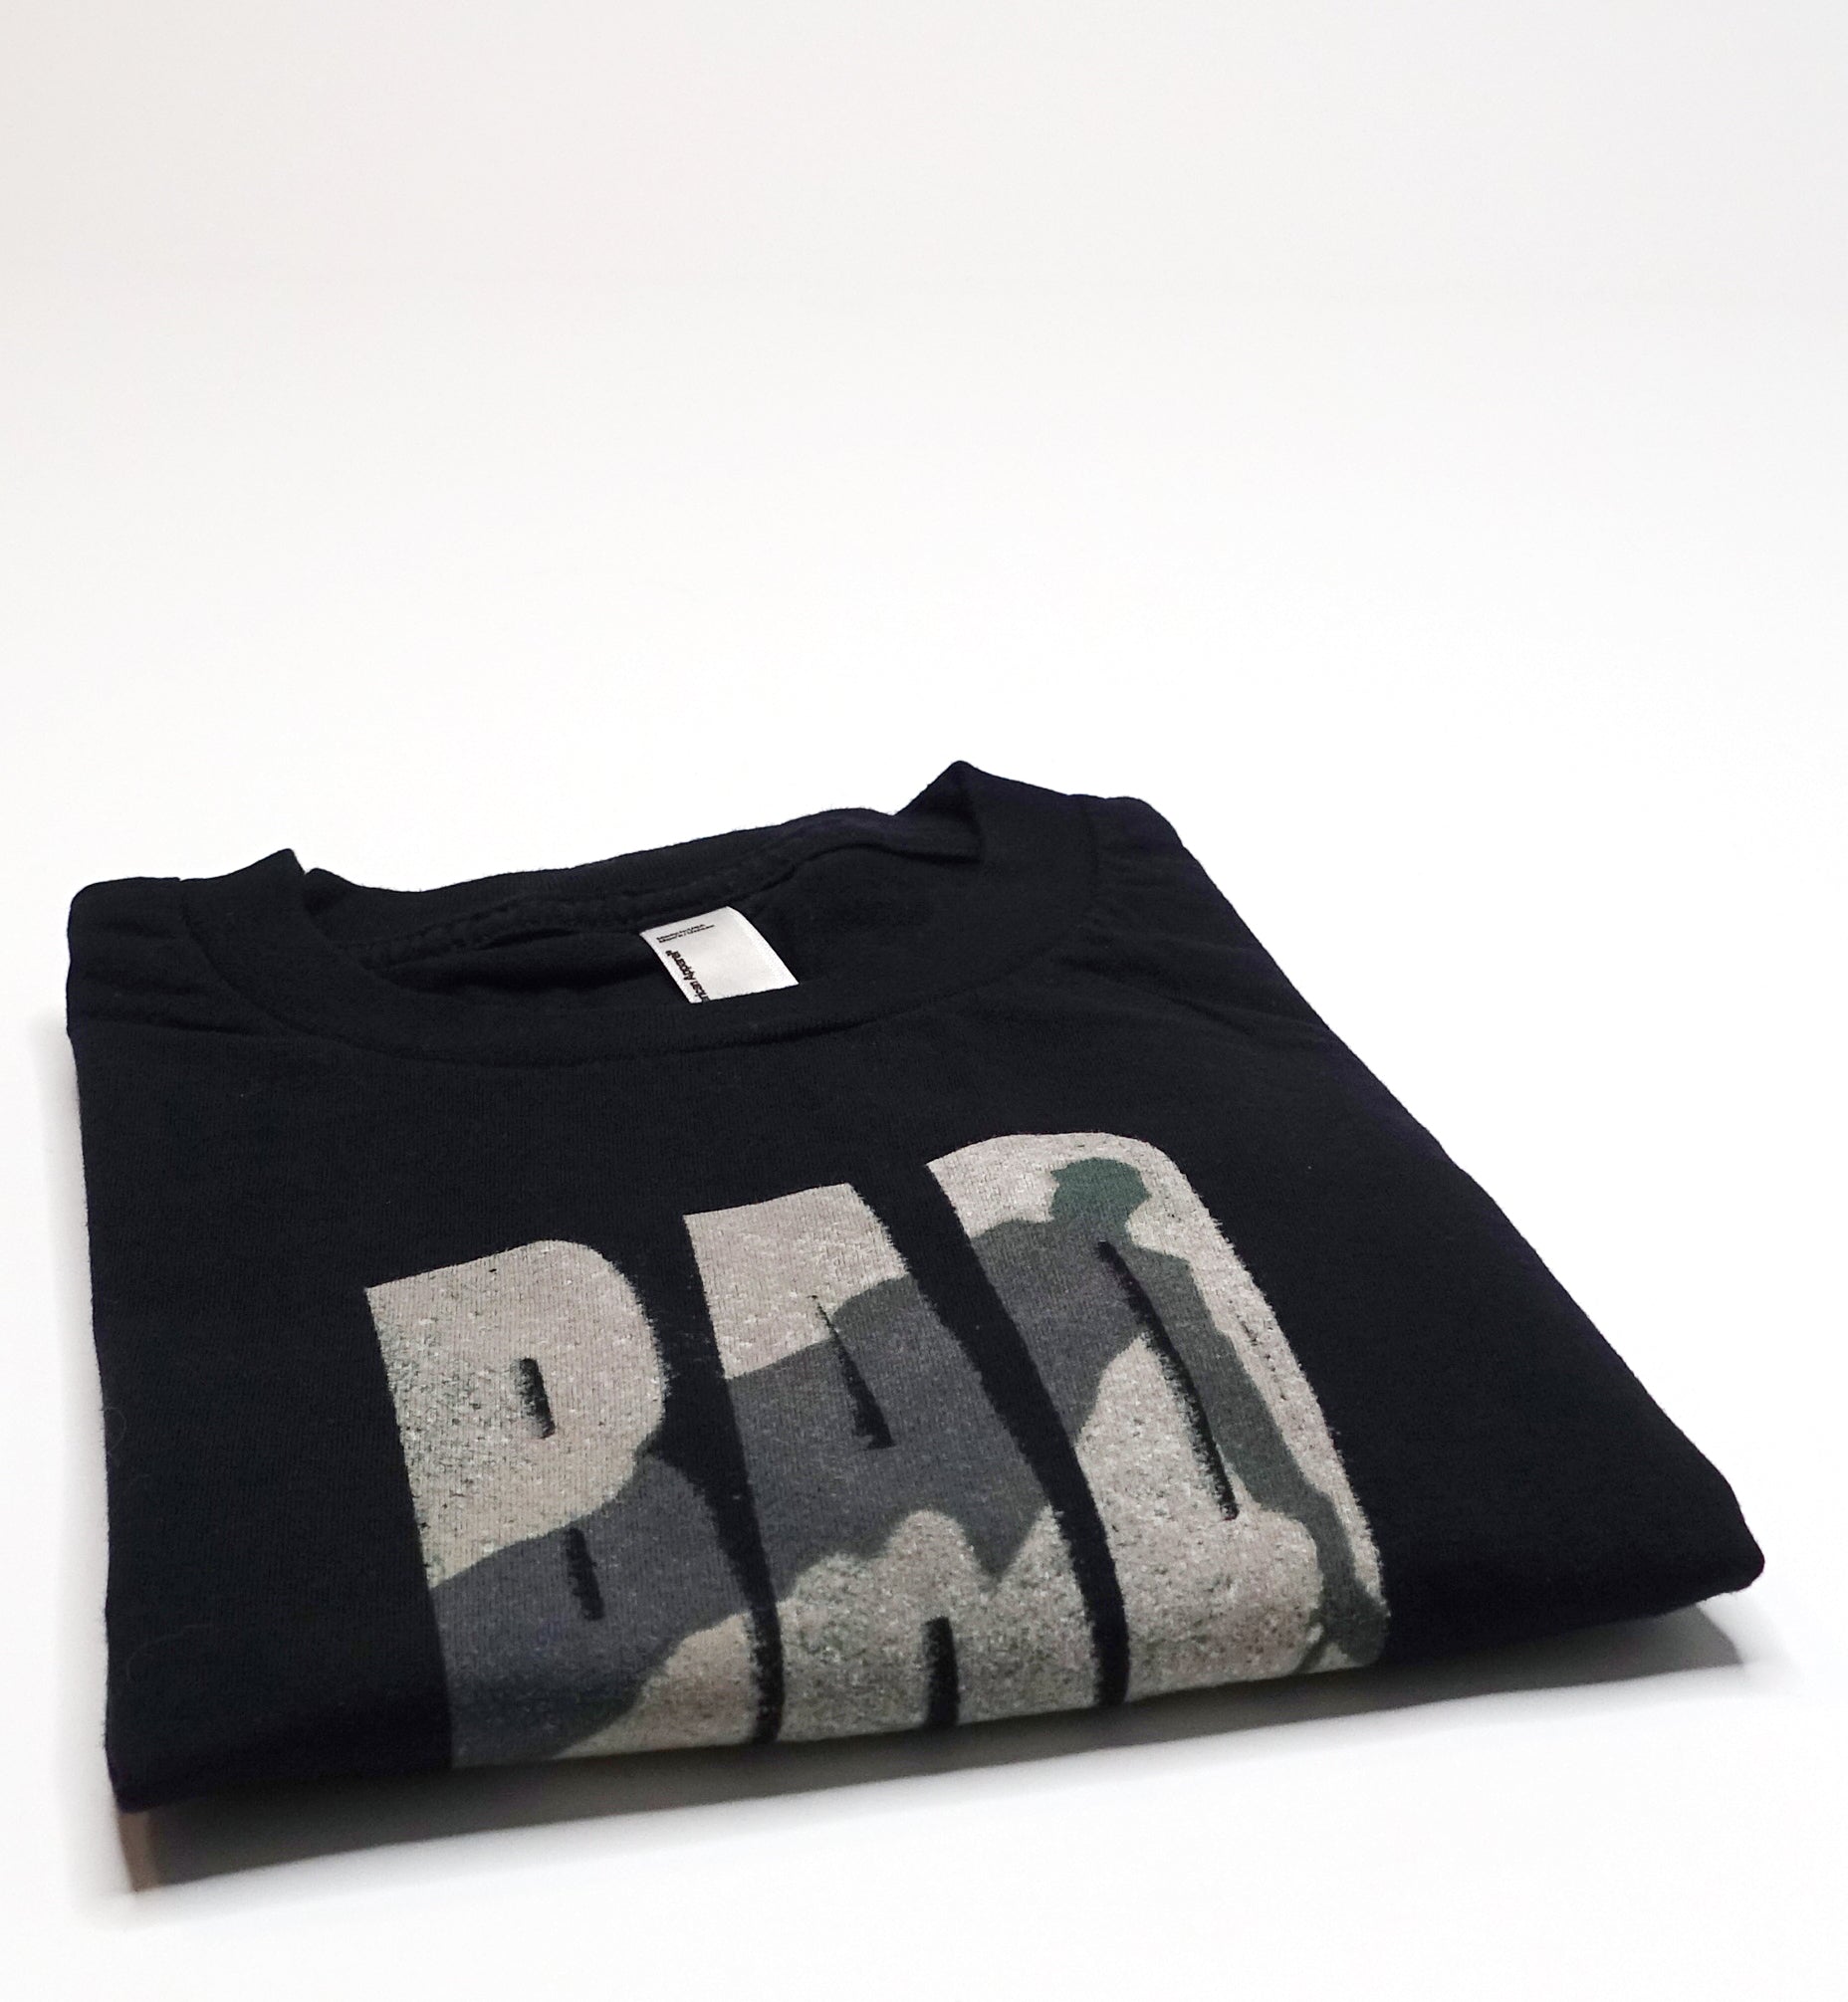 Tom Waits – Bad As Me 2011 Tour Shirt Size Small